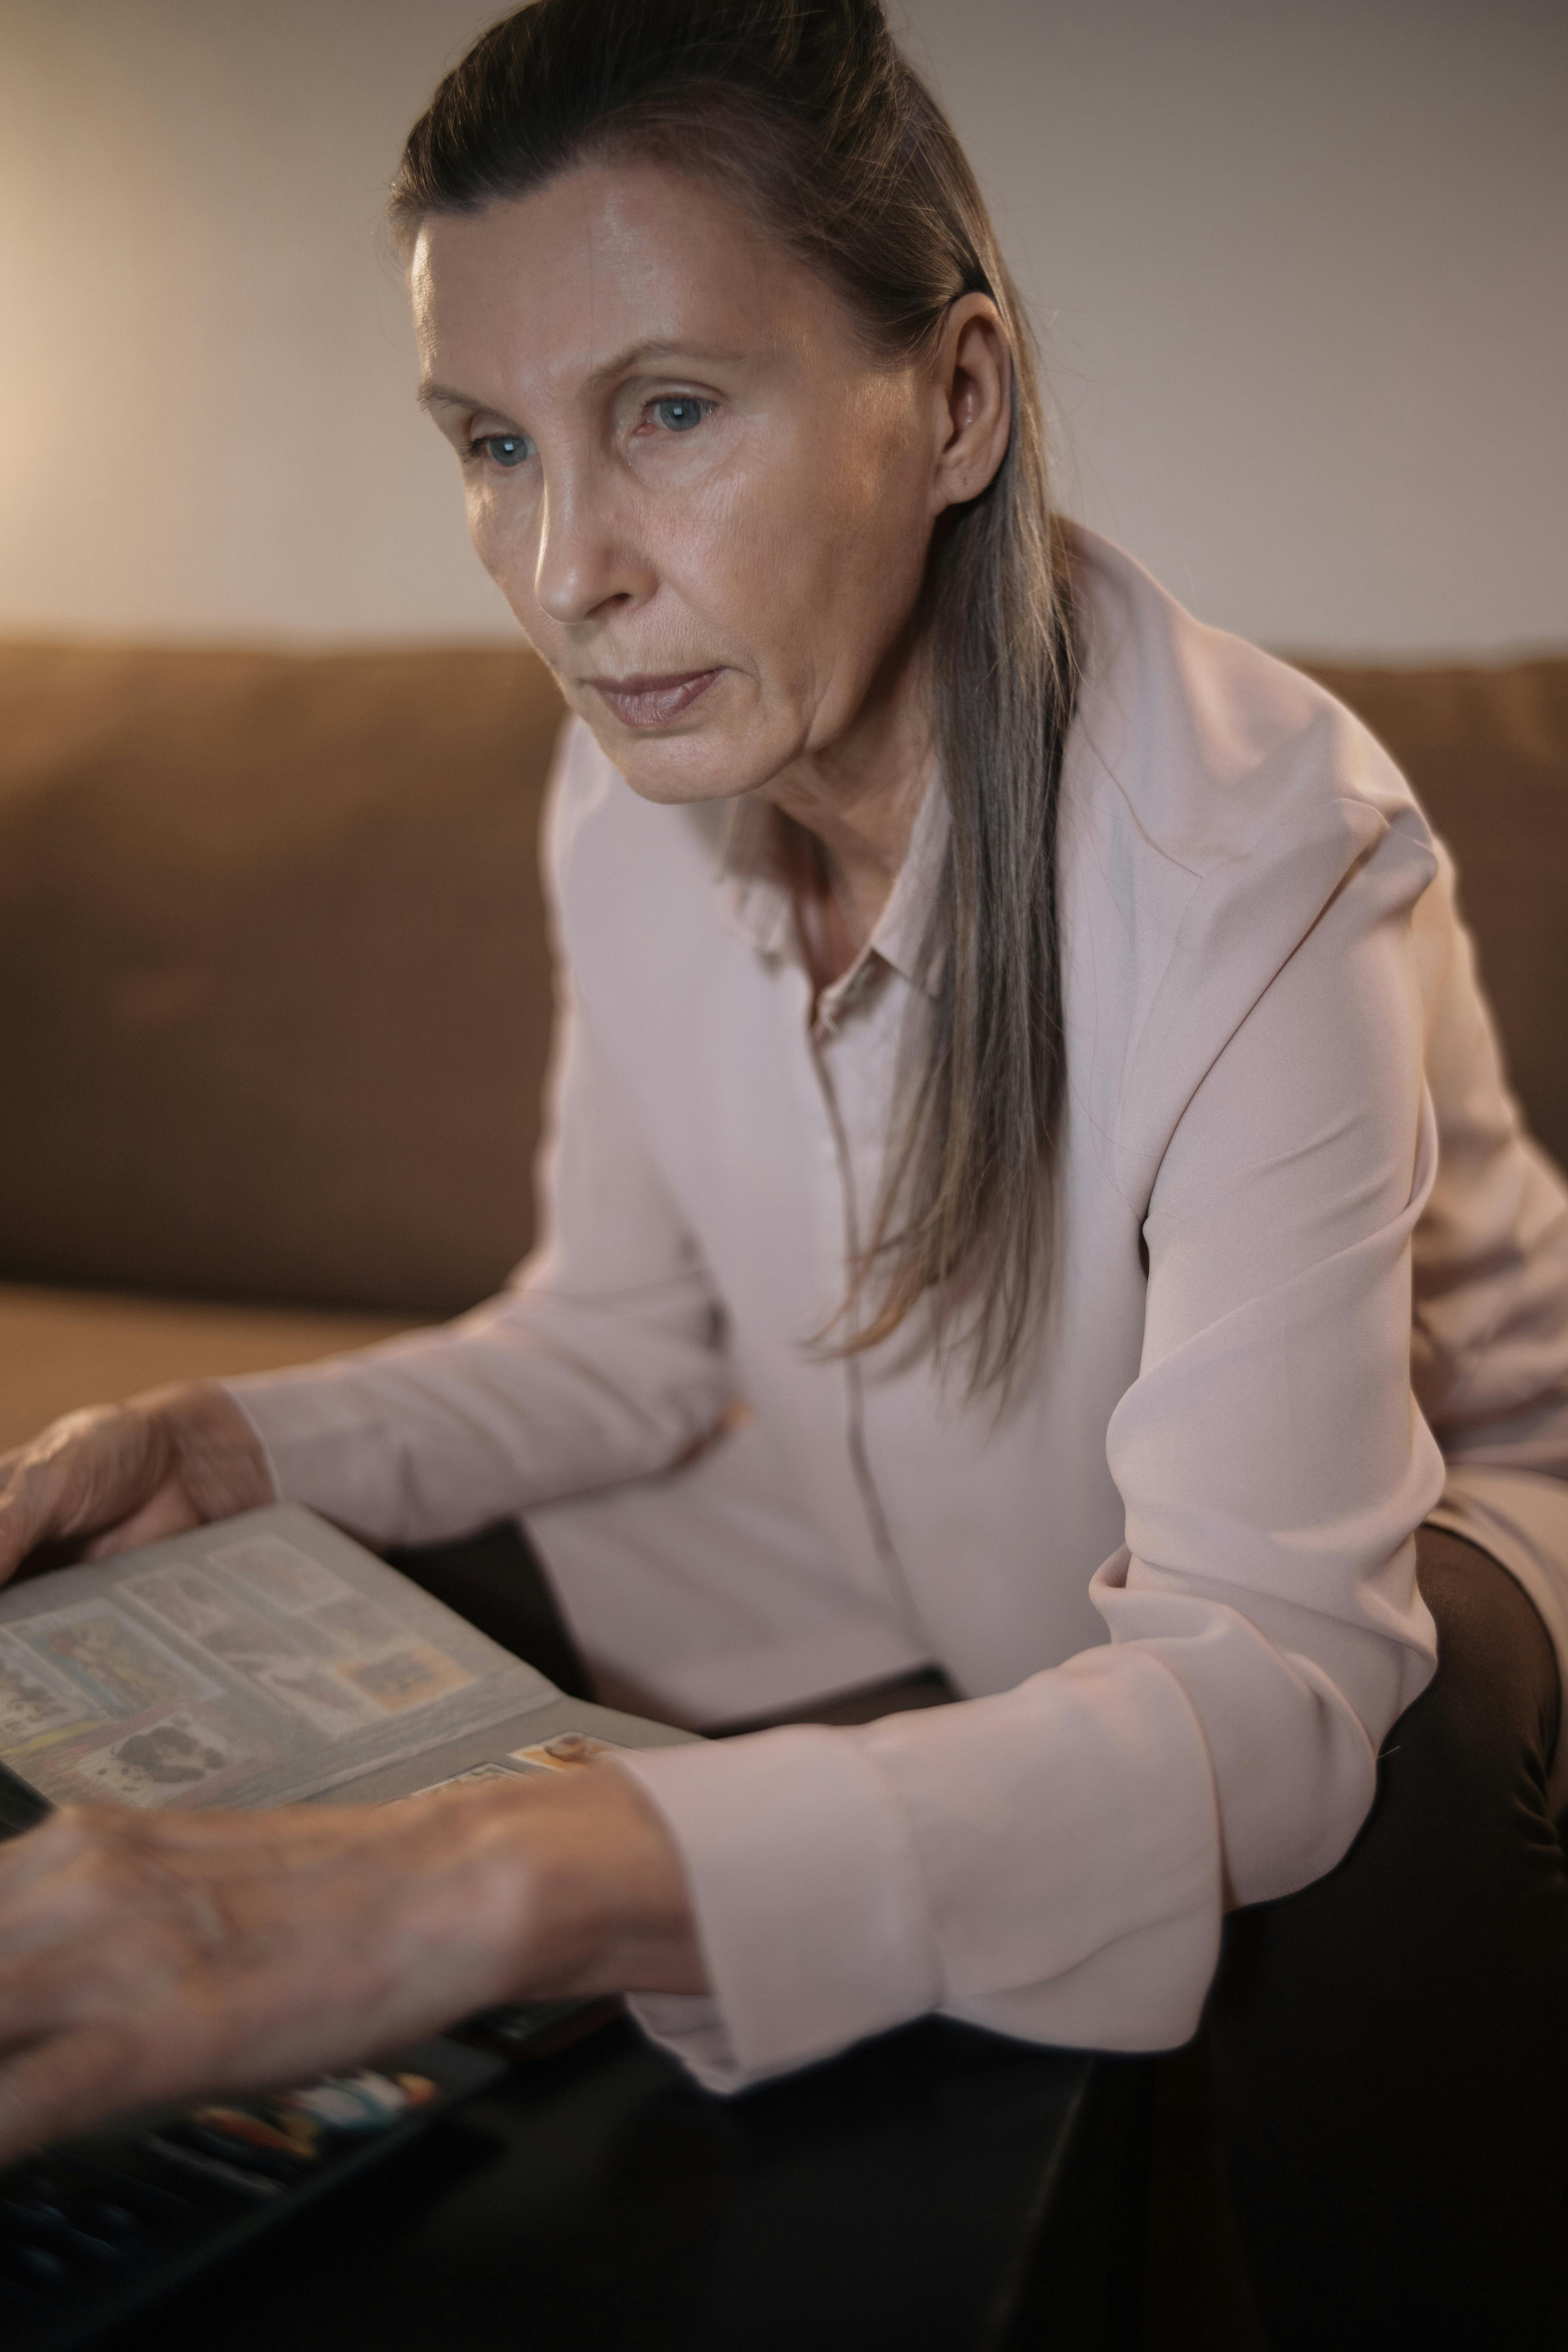 An older woman | Source: Pexels